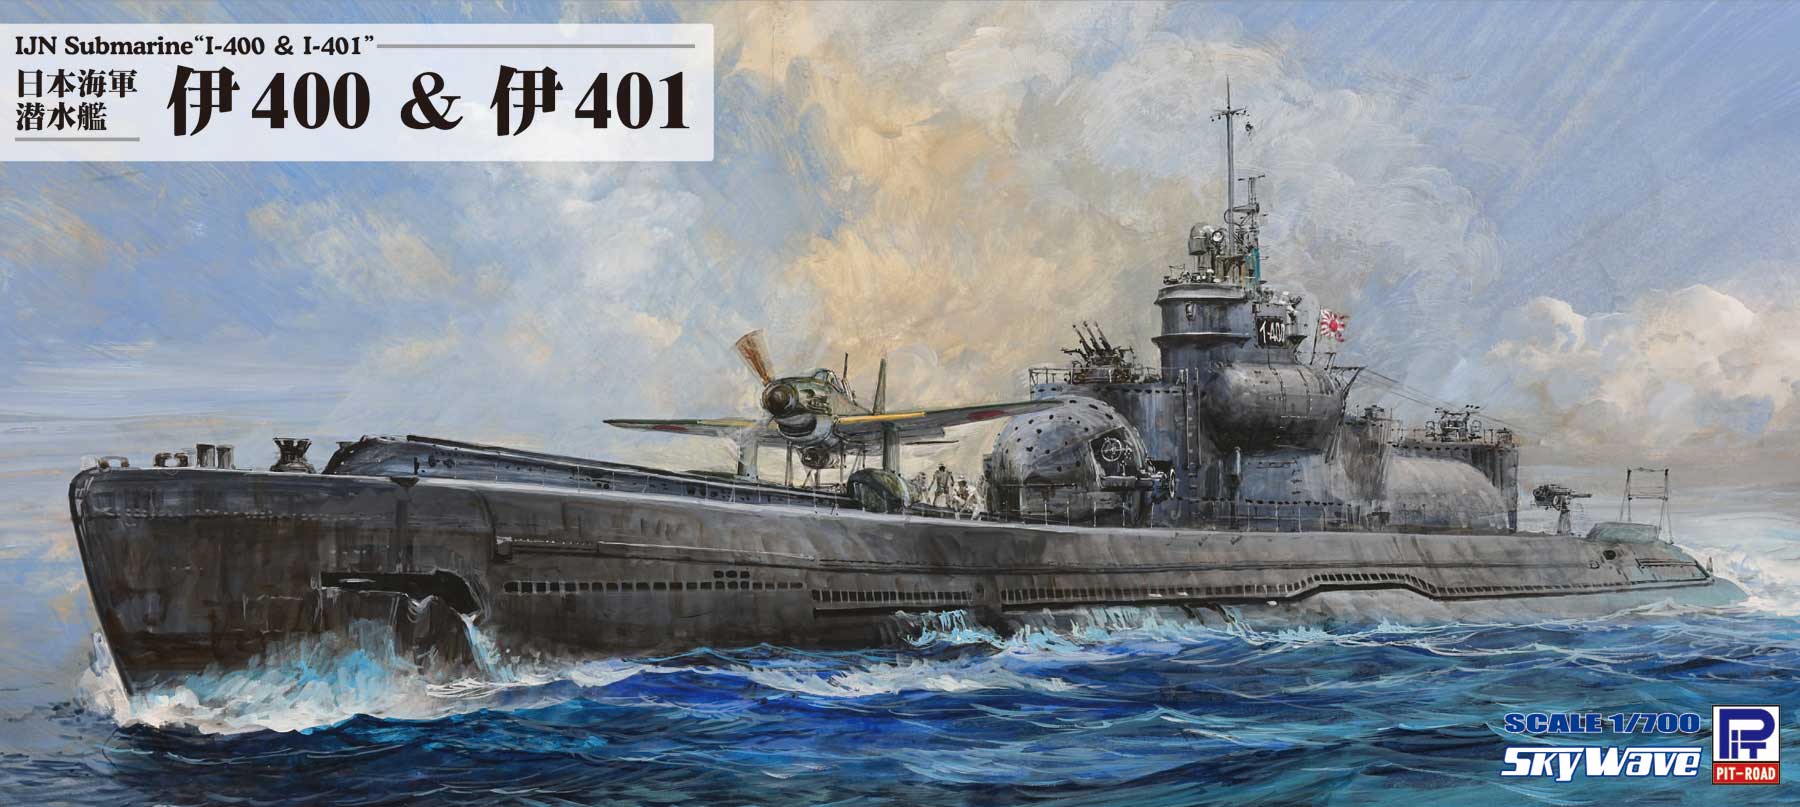 W243 1/700 日本海軍 潜水艦 伊400 & 伊401